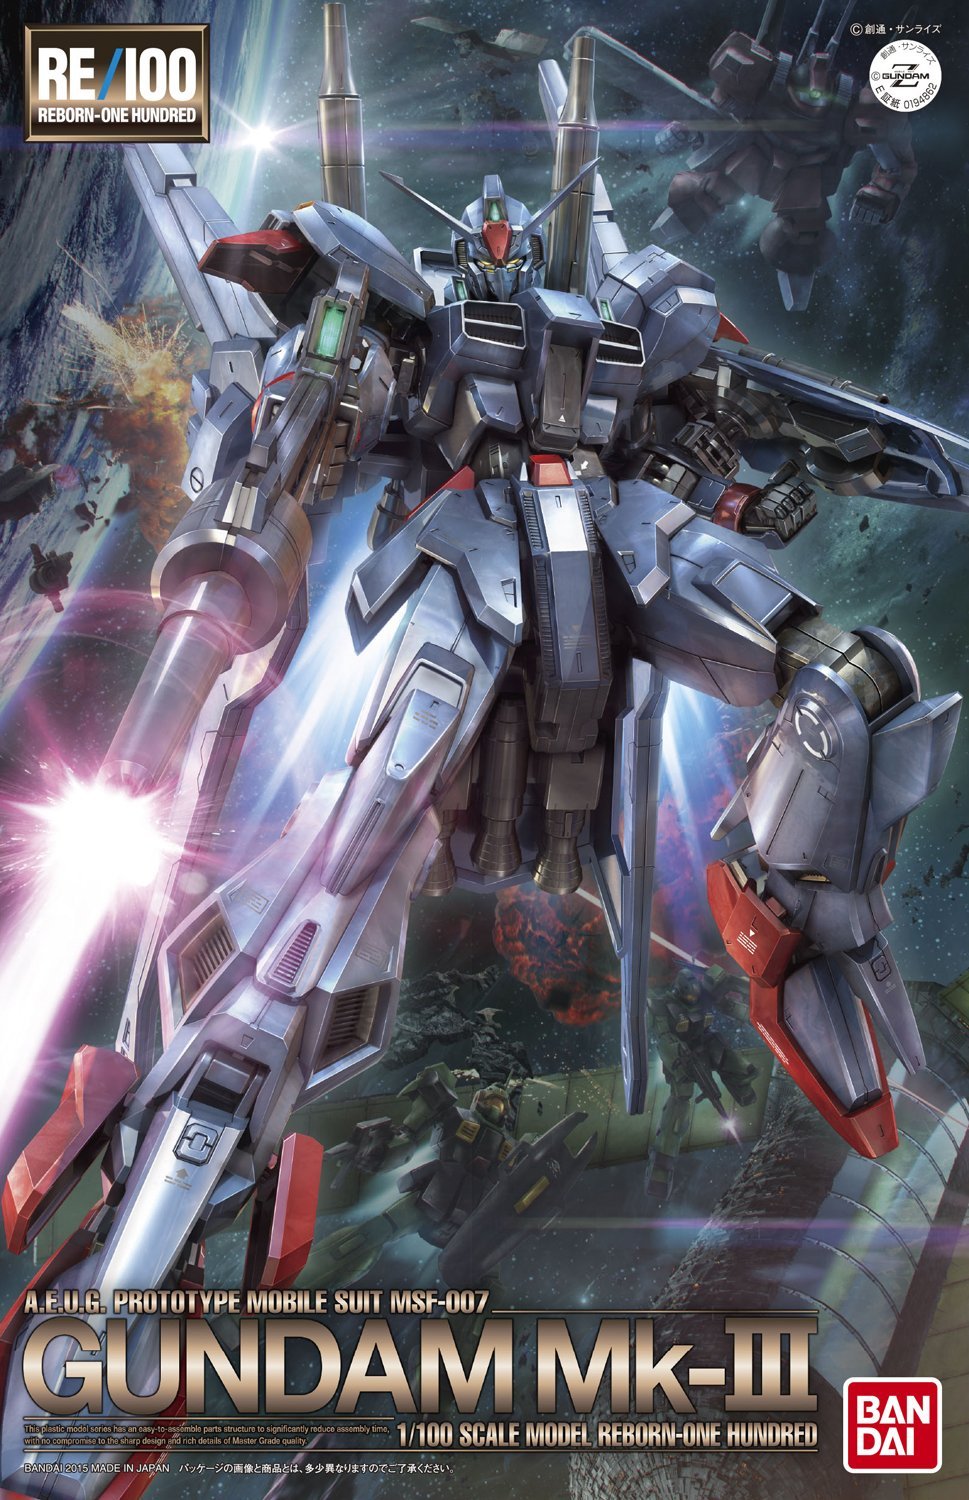 Gundam RE/100 #002 Gundam Mark III Model Kit